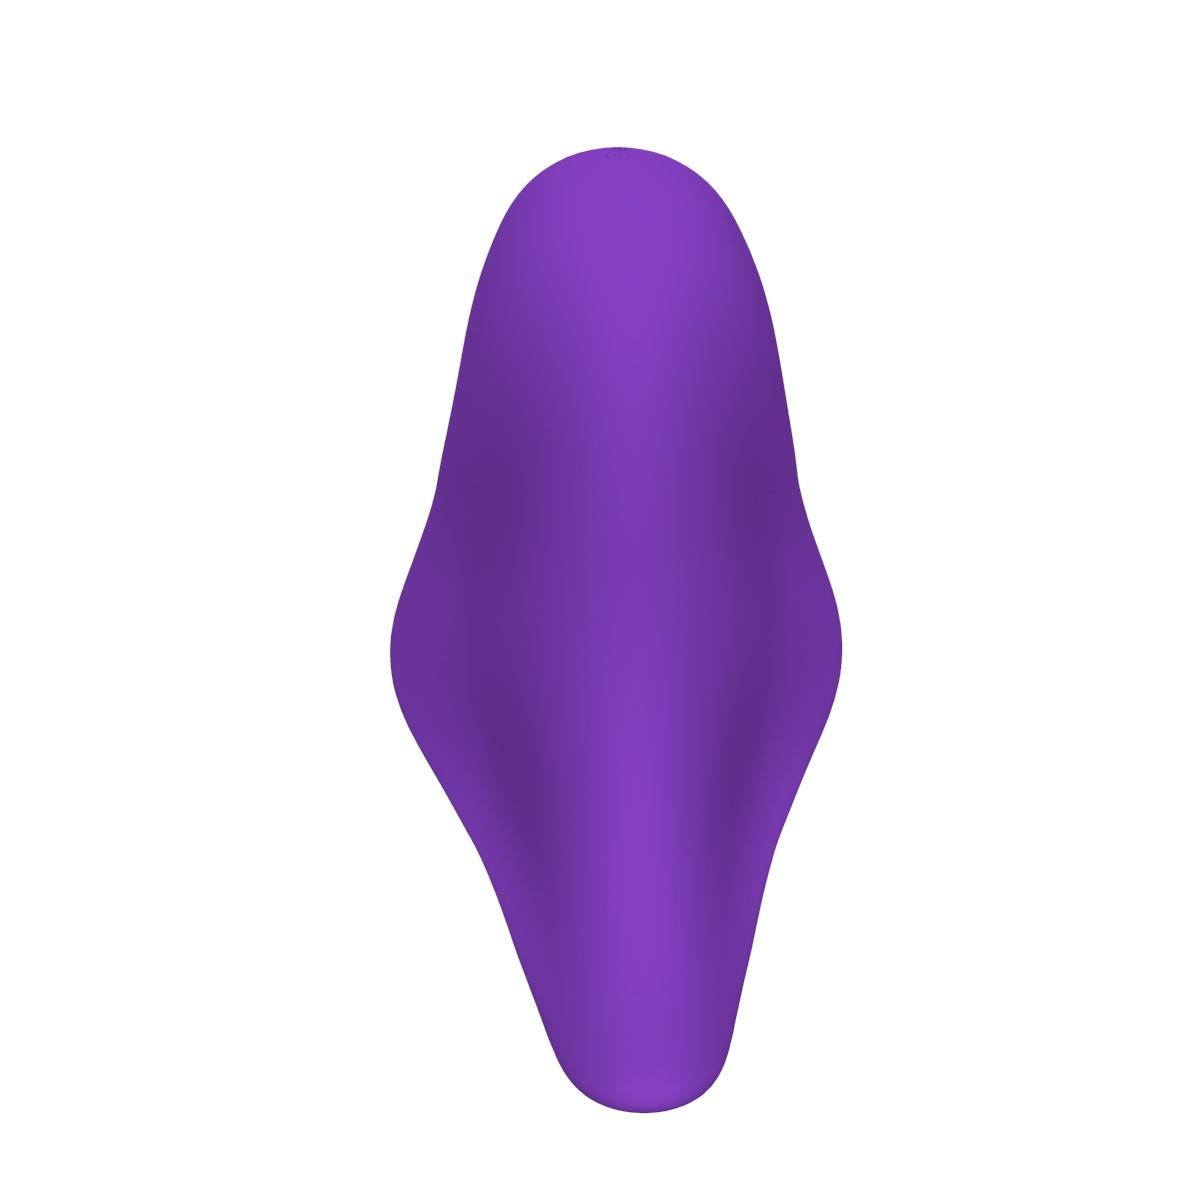 Dolphin, Adult Sexy Female invisible wear, clitoris stimulation, wireless remote control